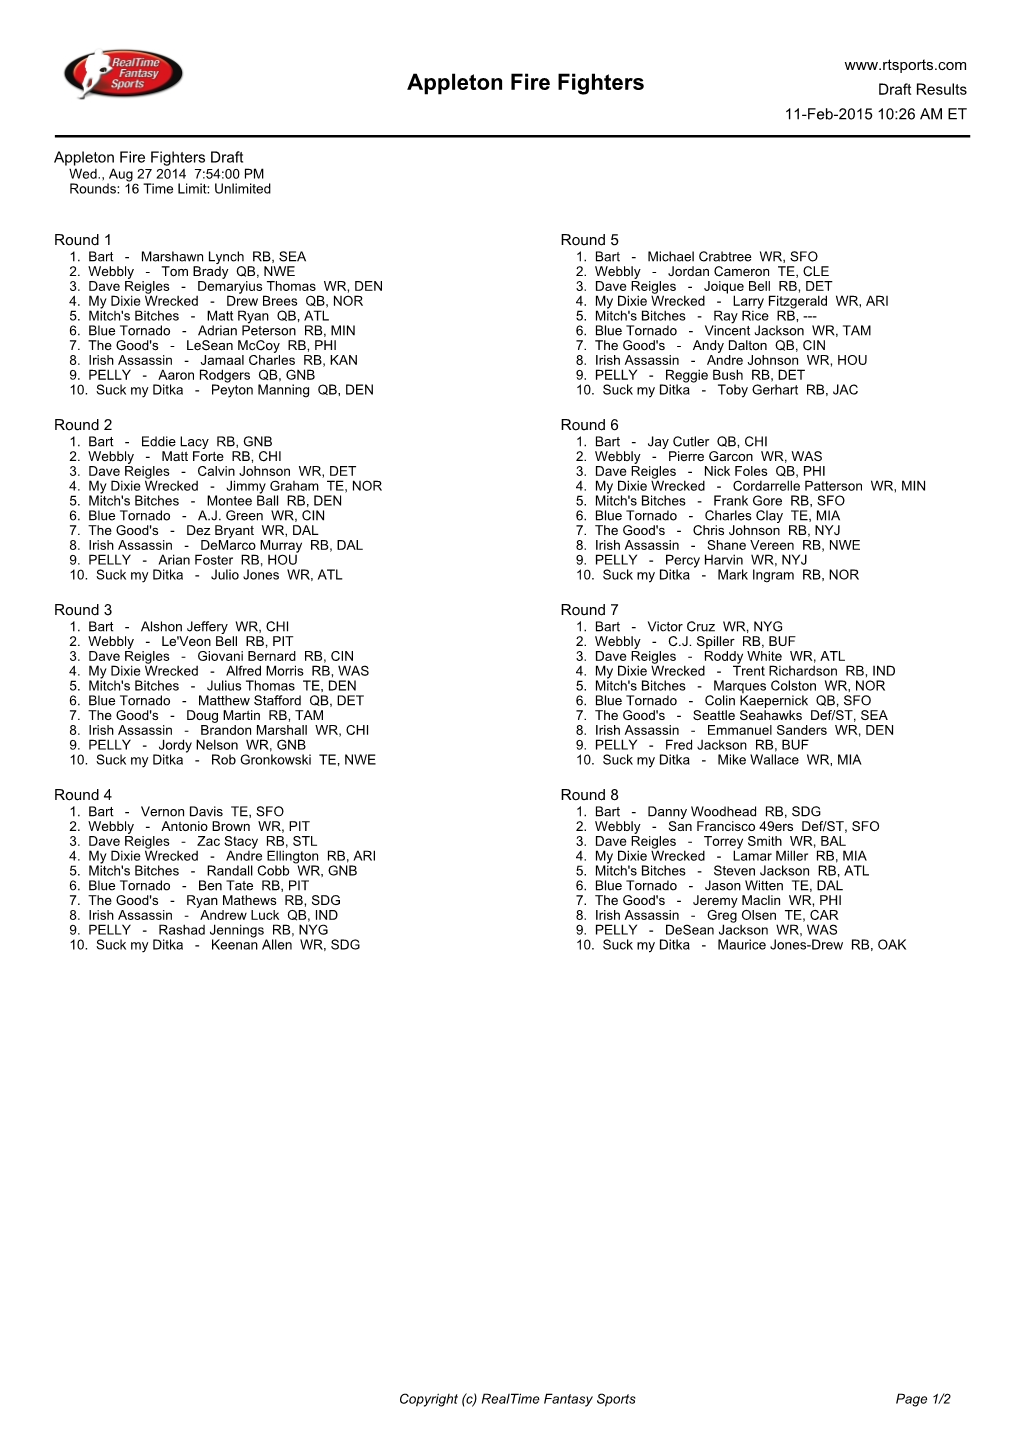 Appleton Fire Fighters Draft Results 11-Feb-2015 10:26 AM ET